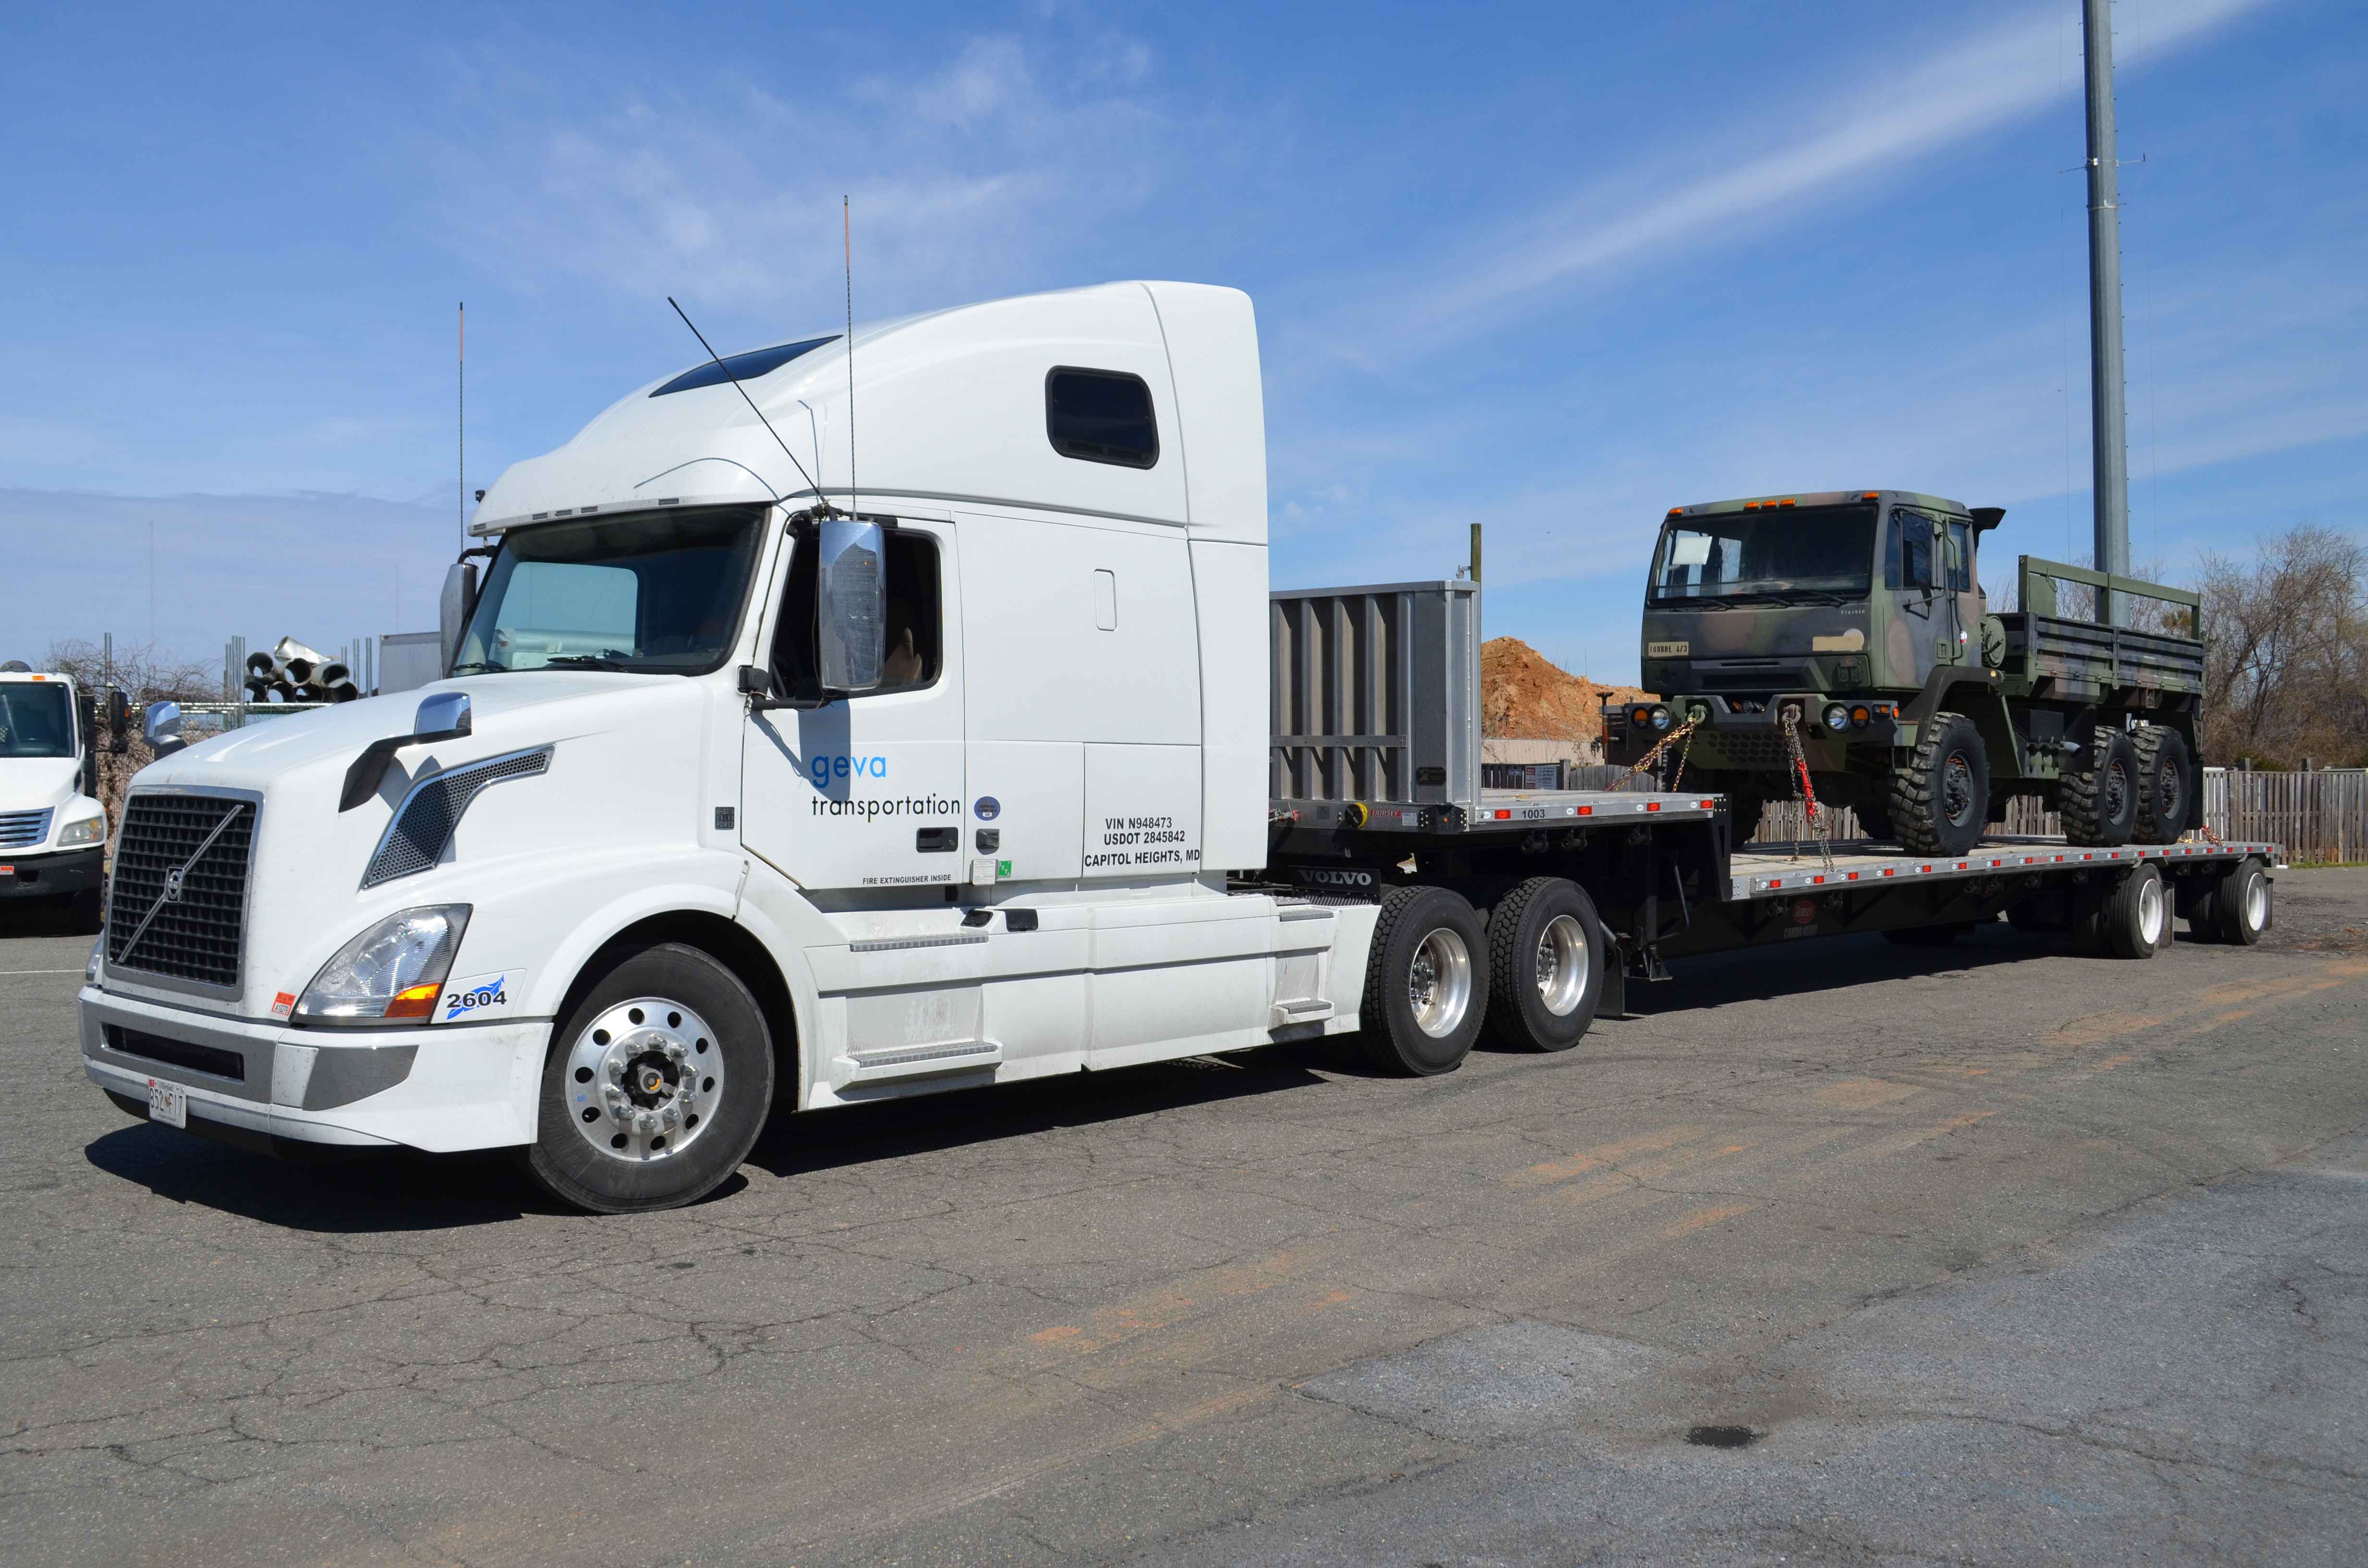 Geva trailer truck transporting military vehicle